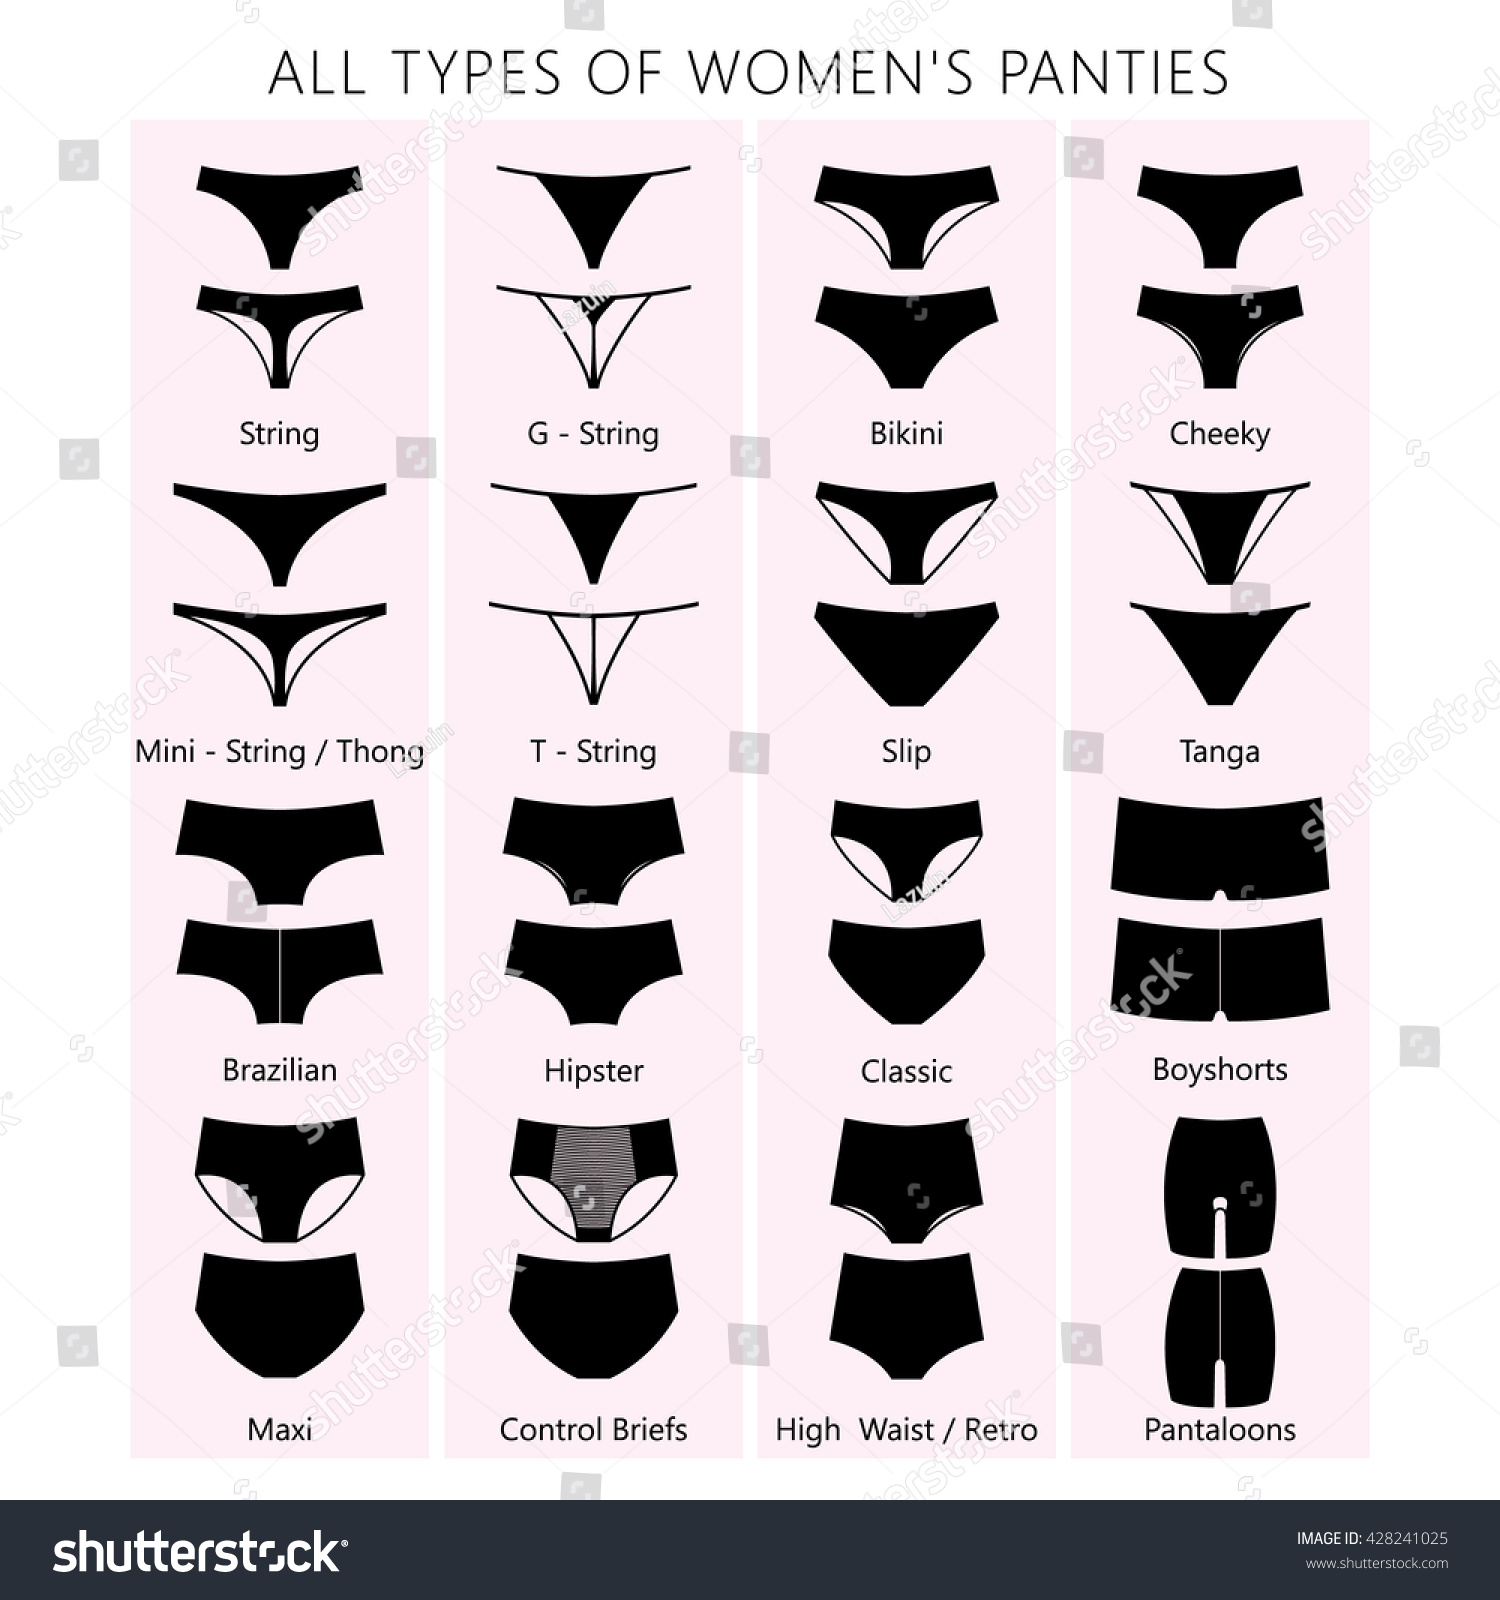 All Types Of Panties 56